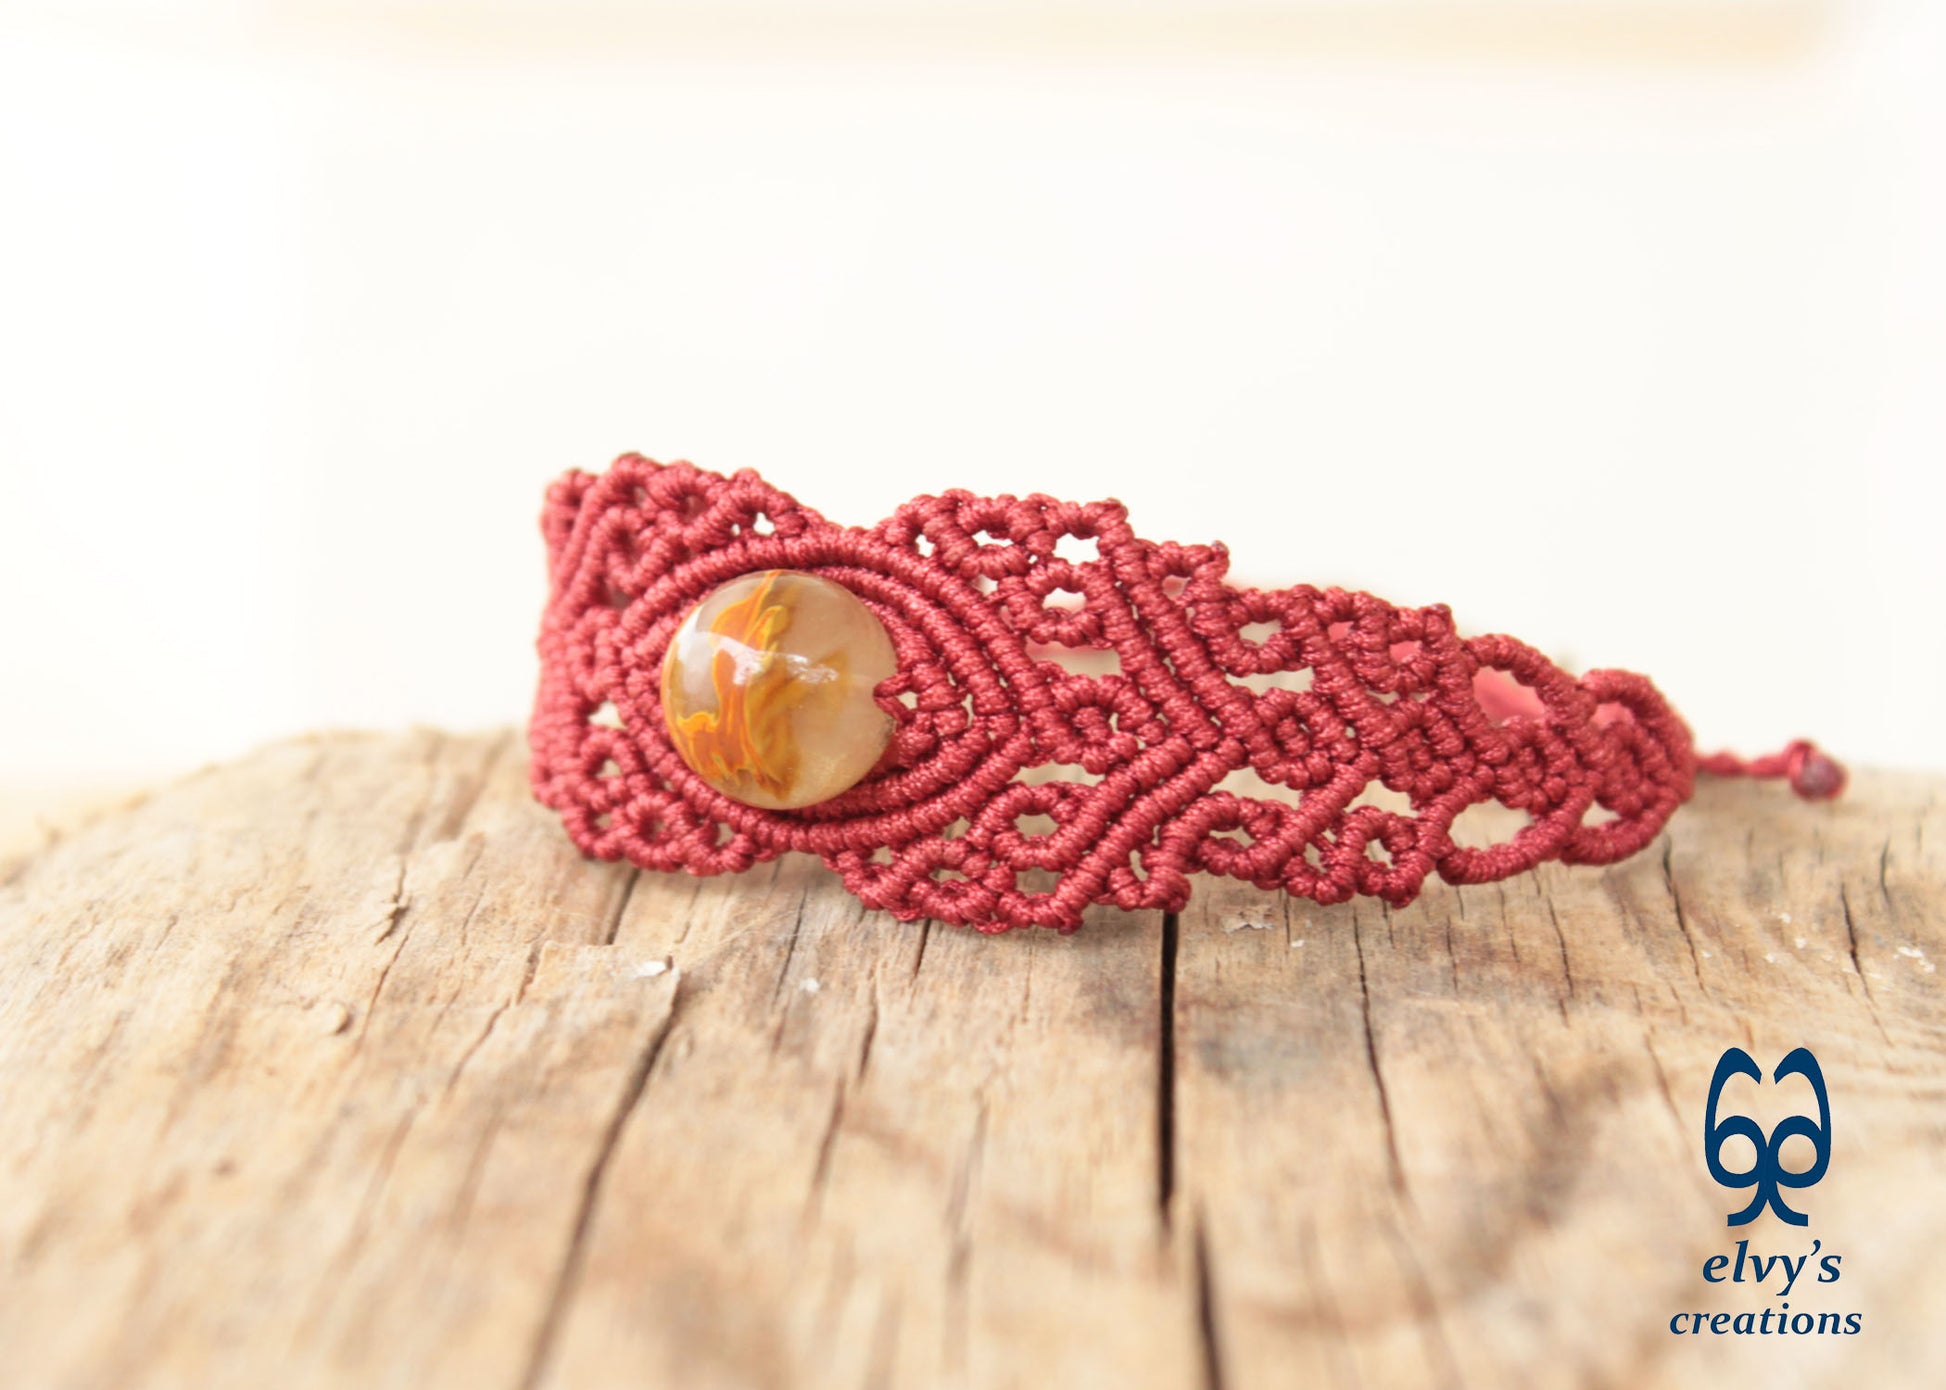 Red Macrame Bracelet with Crystal Quartz Gemstone, Handmade Unique Birthday Gift for Women